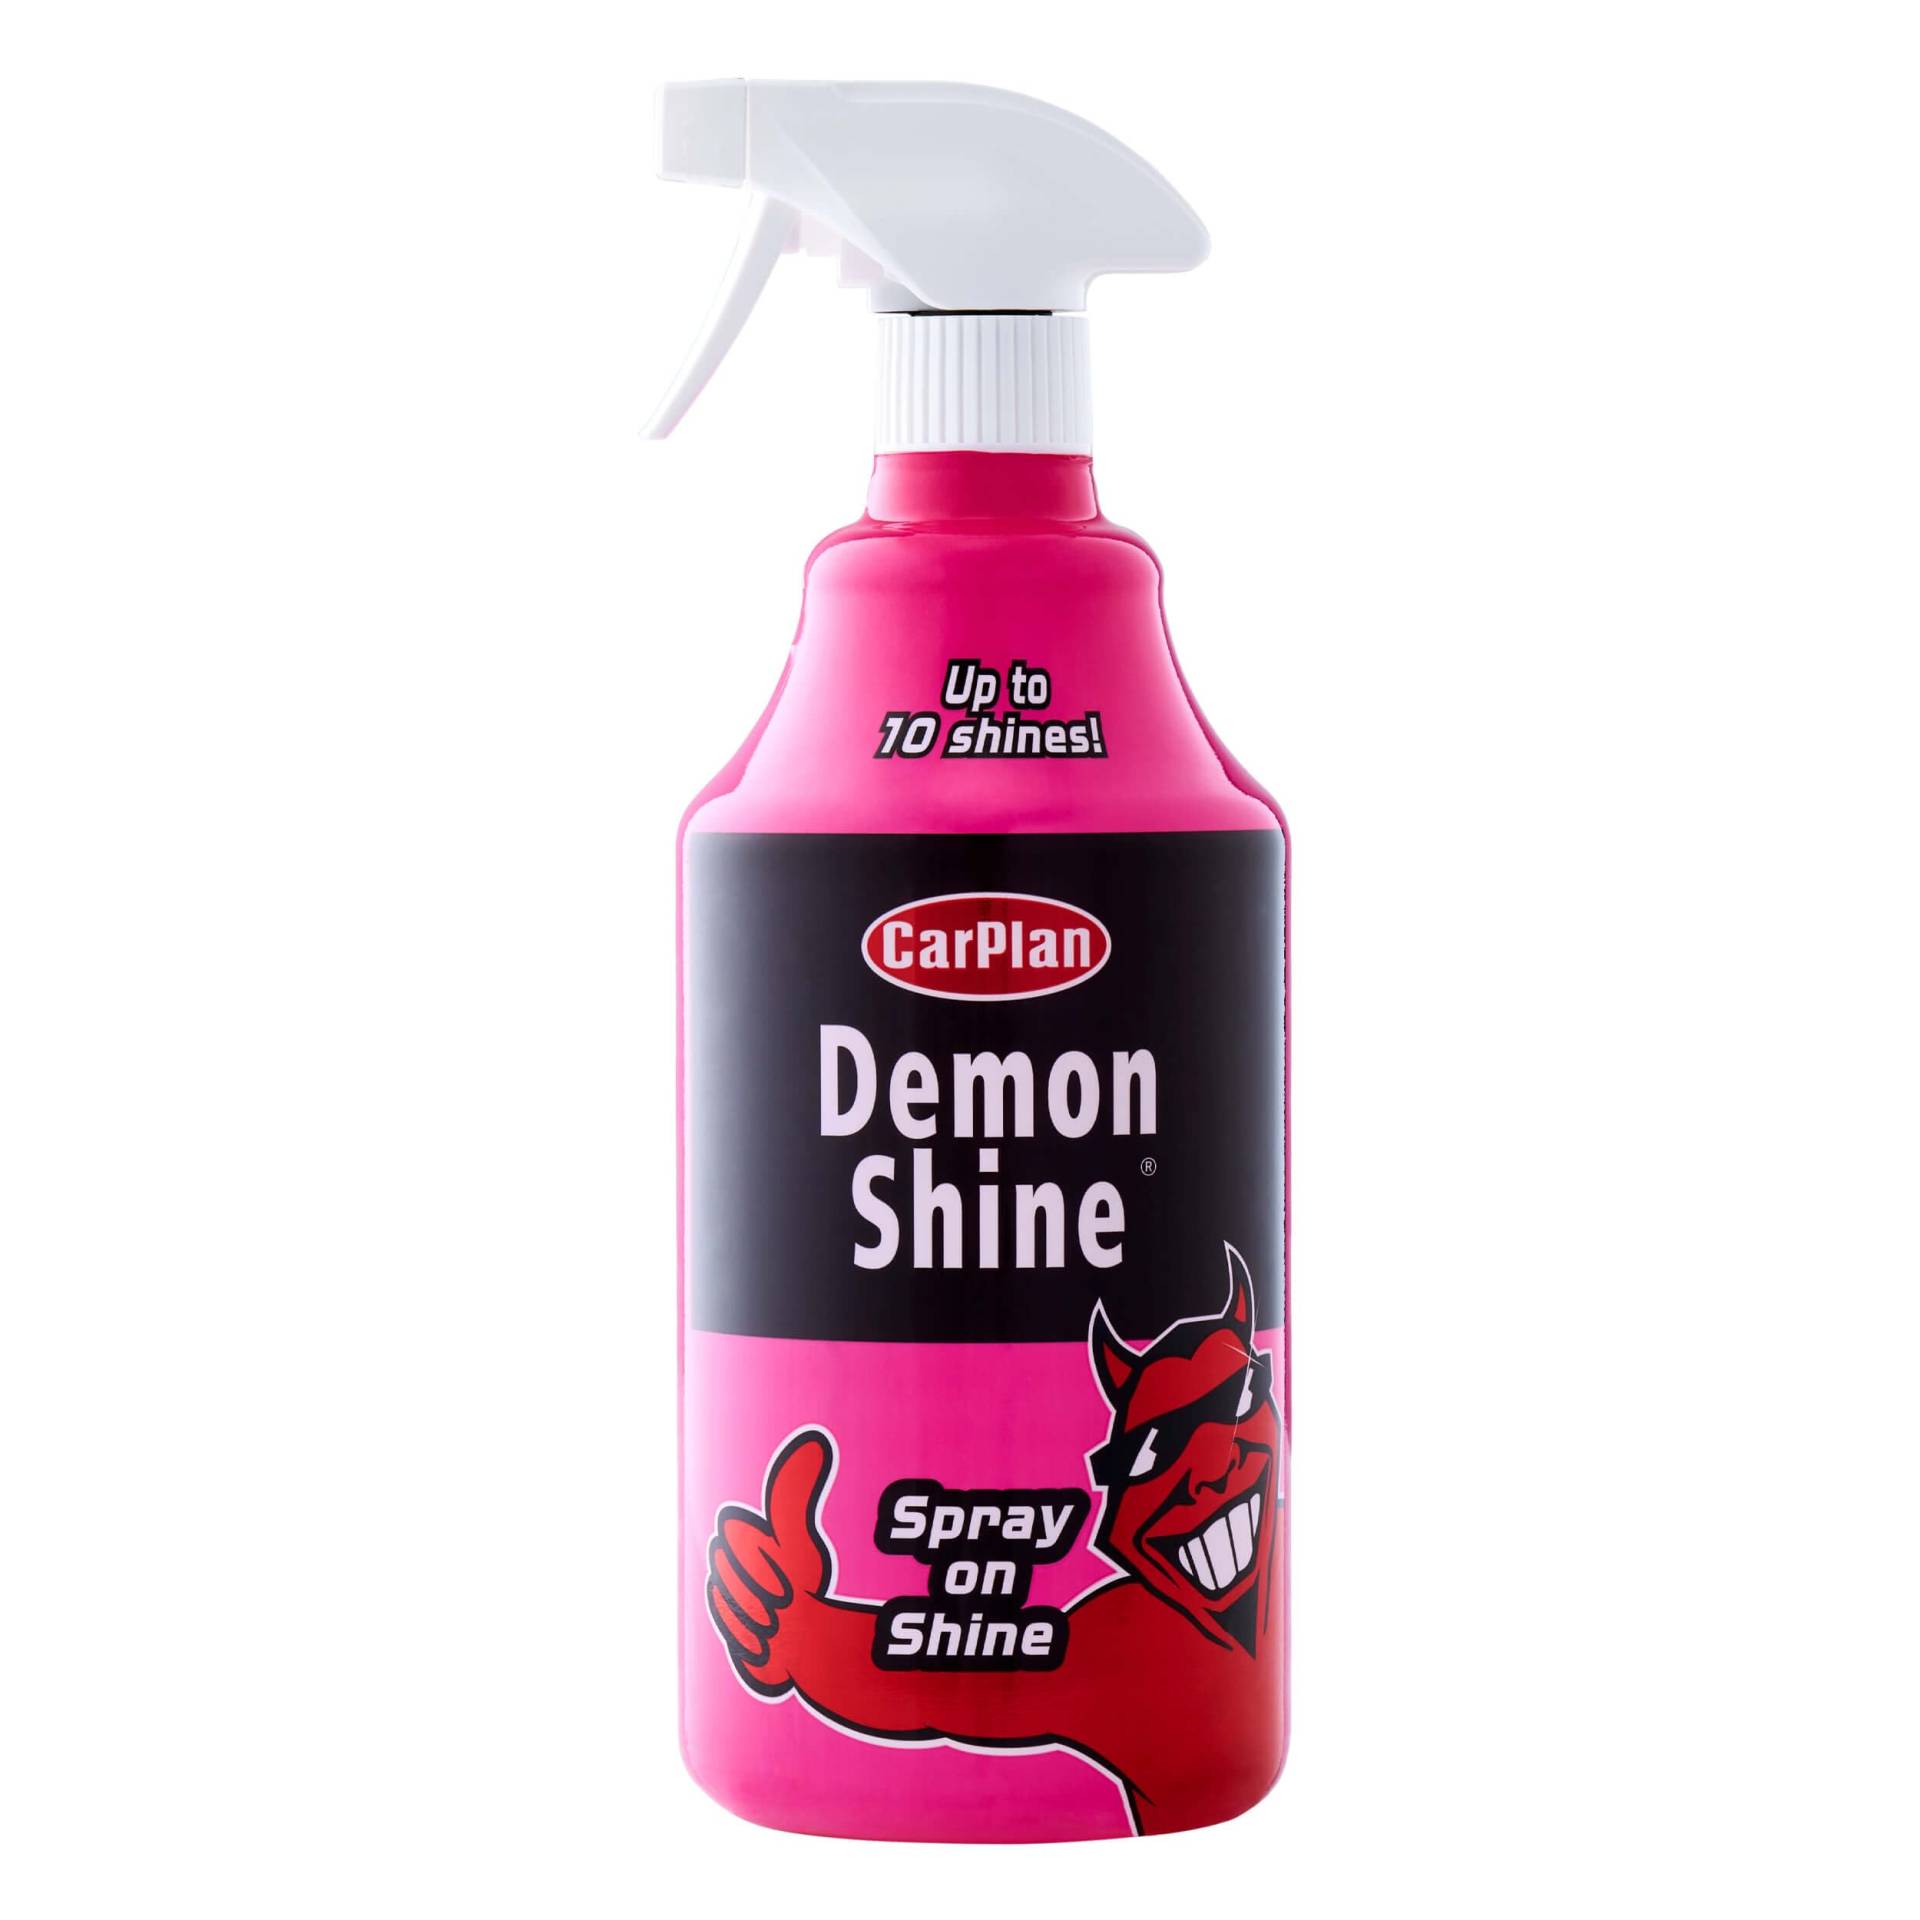 CarPlan Demon Shine Spray On Shine, 1 l von Carplan